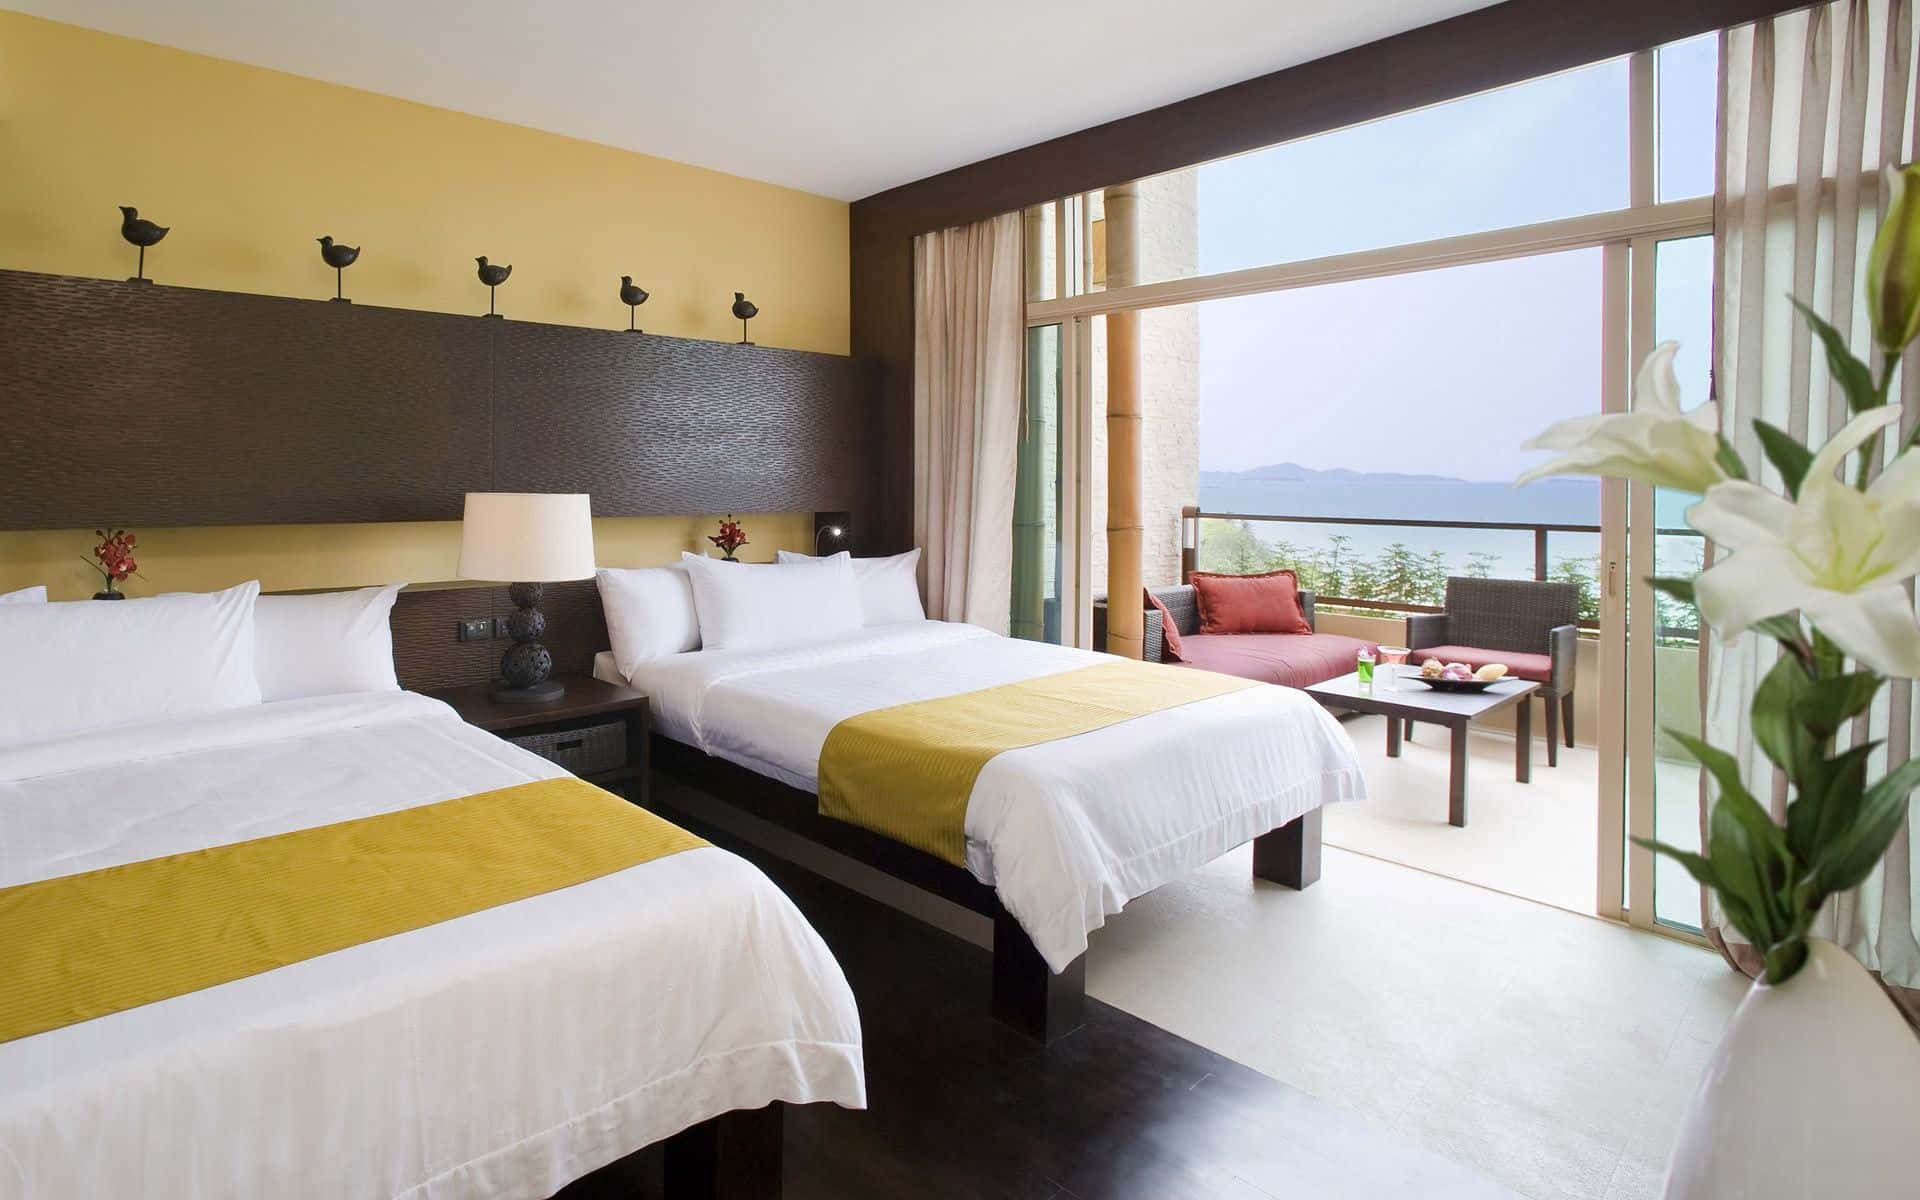 Luxurious Hotel Suite with Elegant Bedroom